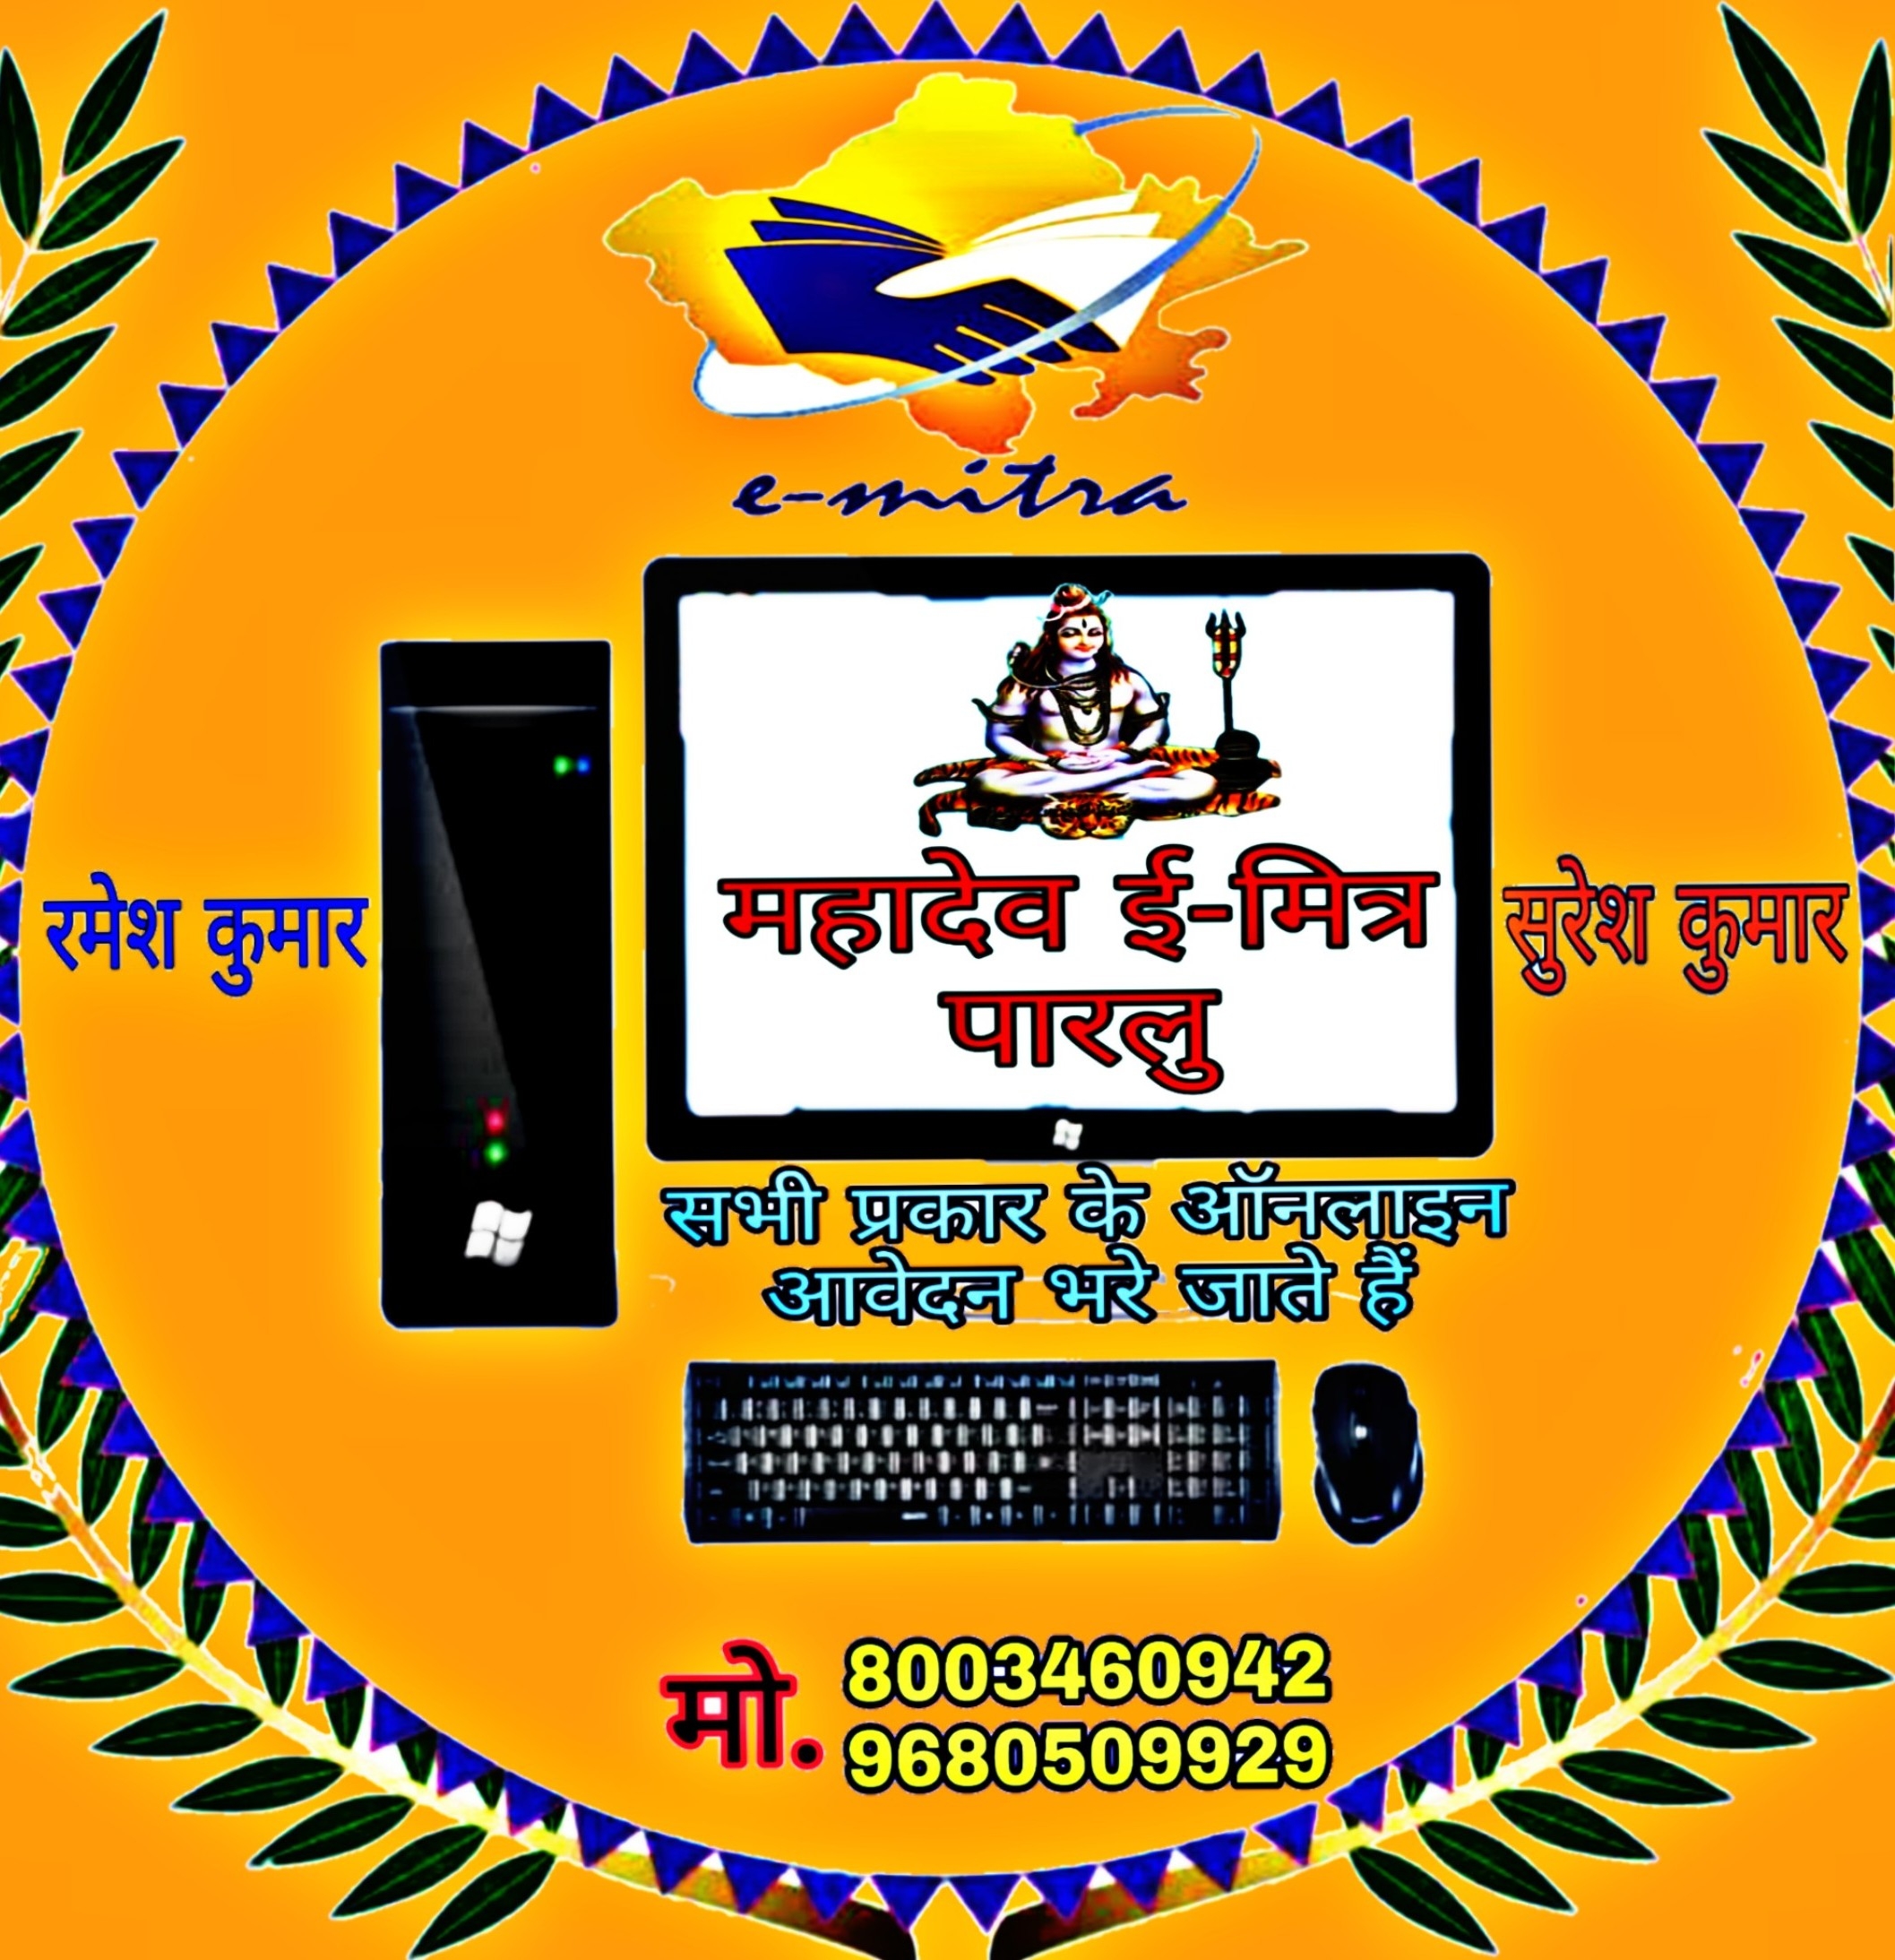 Achariya Technologies Emitra LSP Alwar